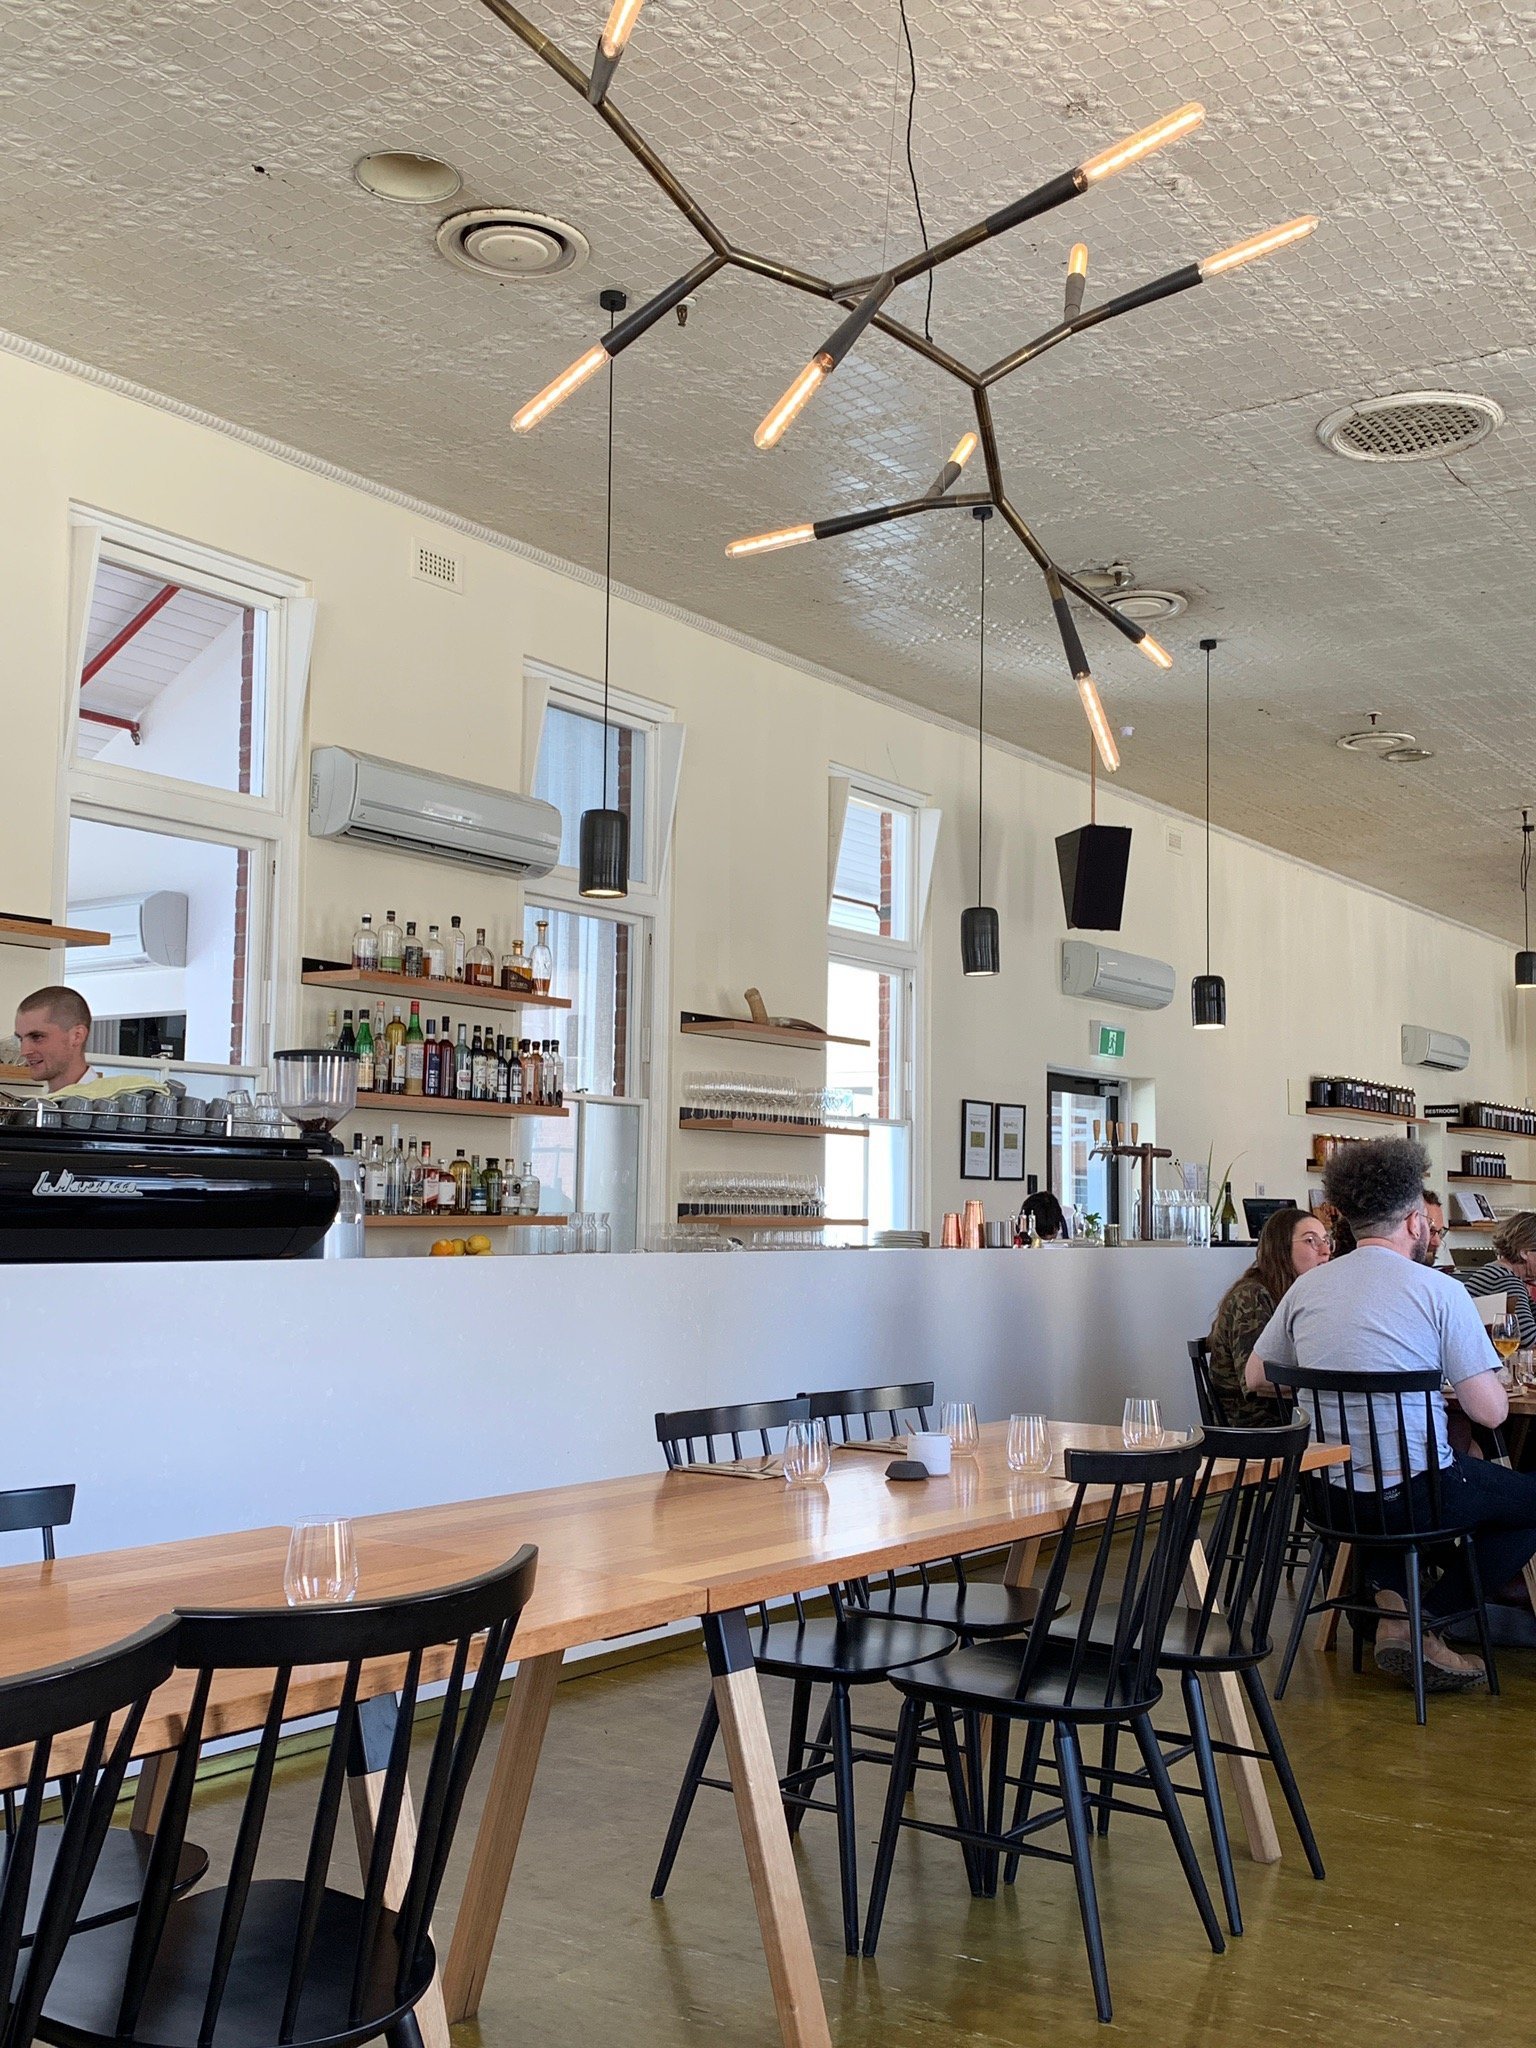 The Agrarian Kitchen Eatery - Restaurants Sydney 10